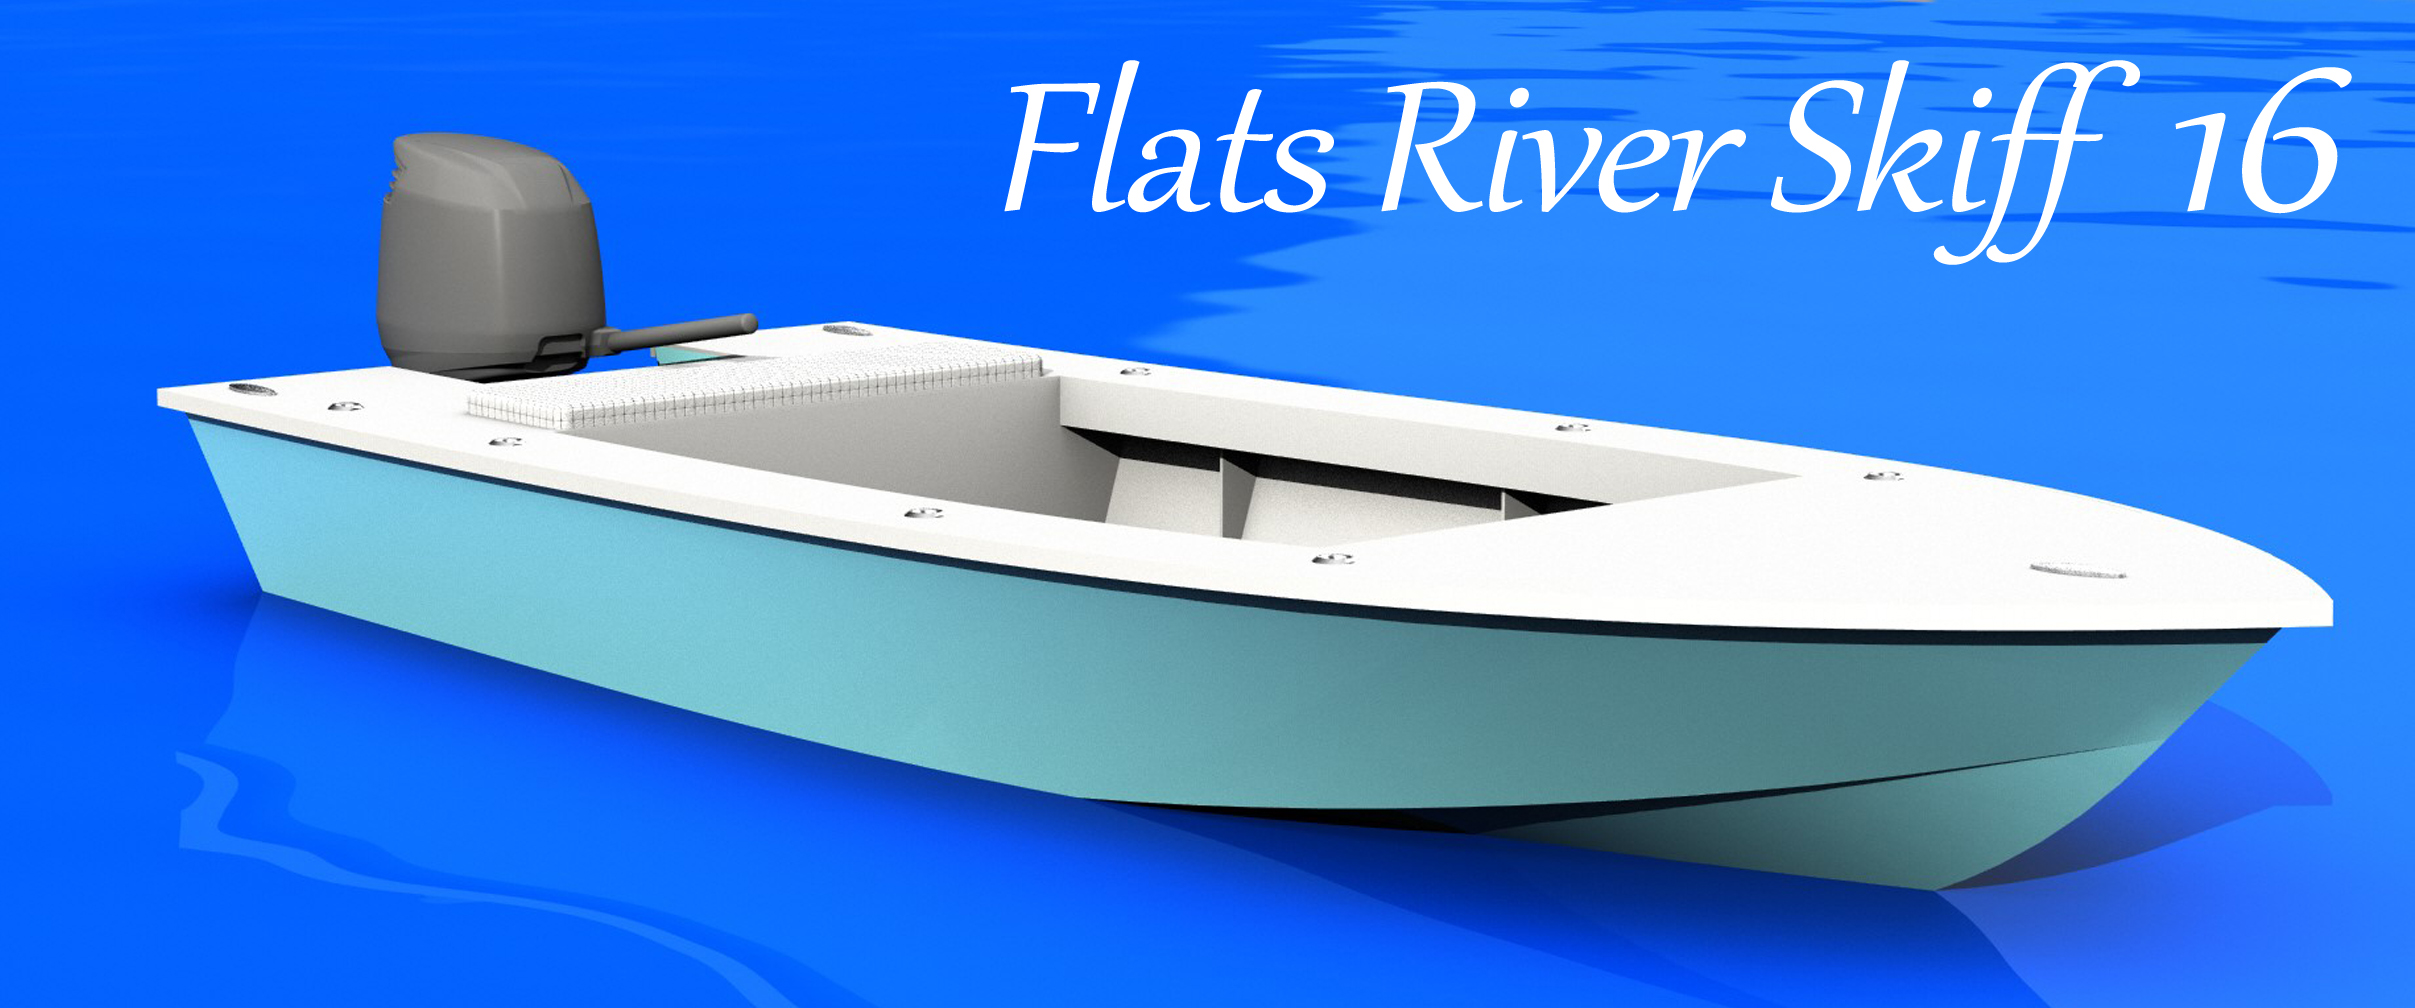 Flats River Skiff 16